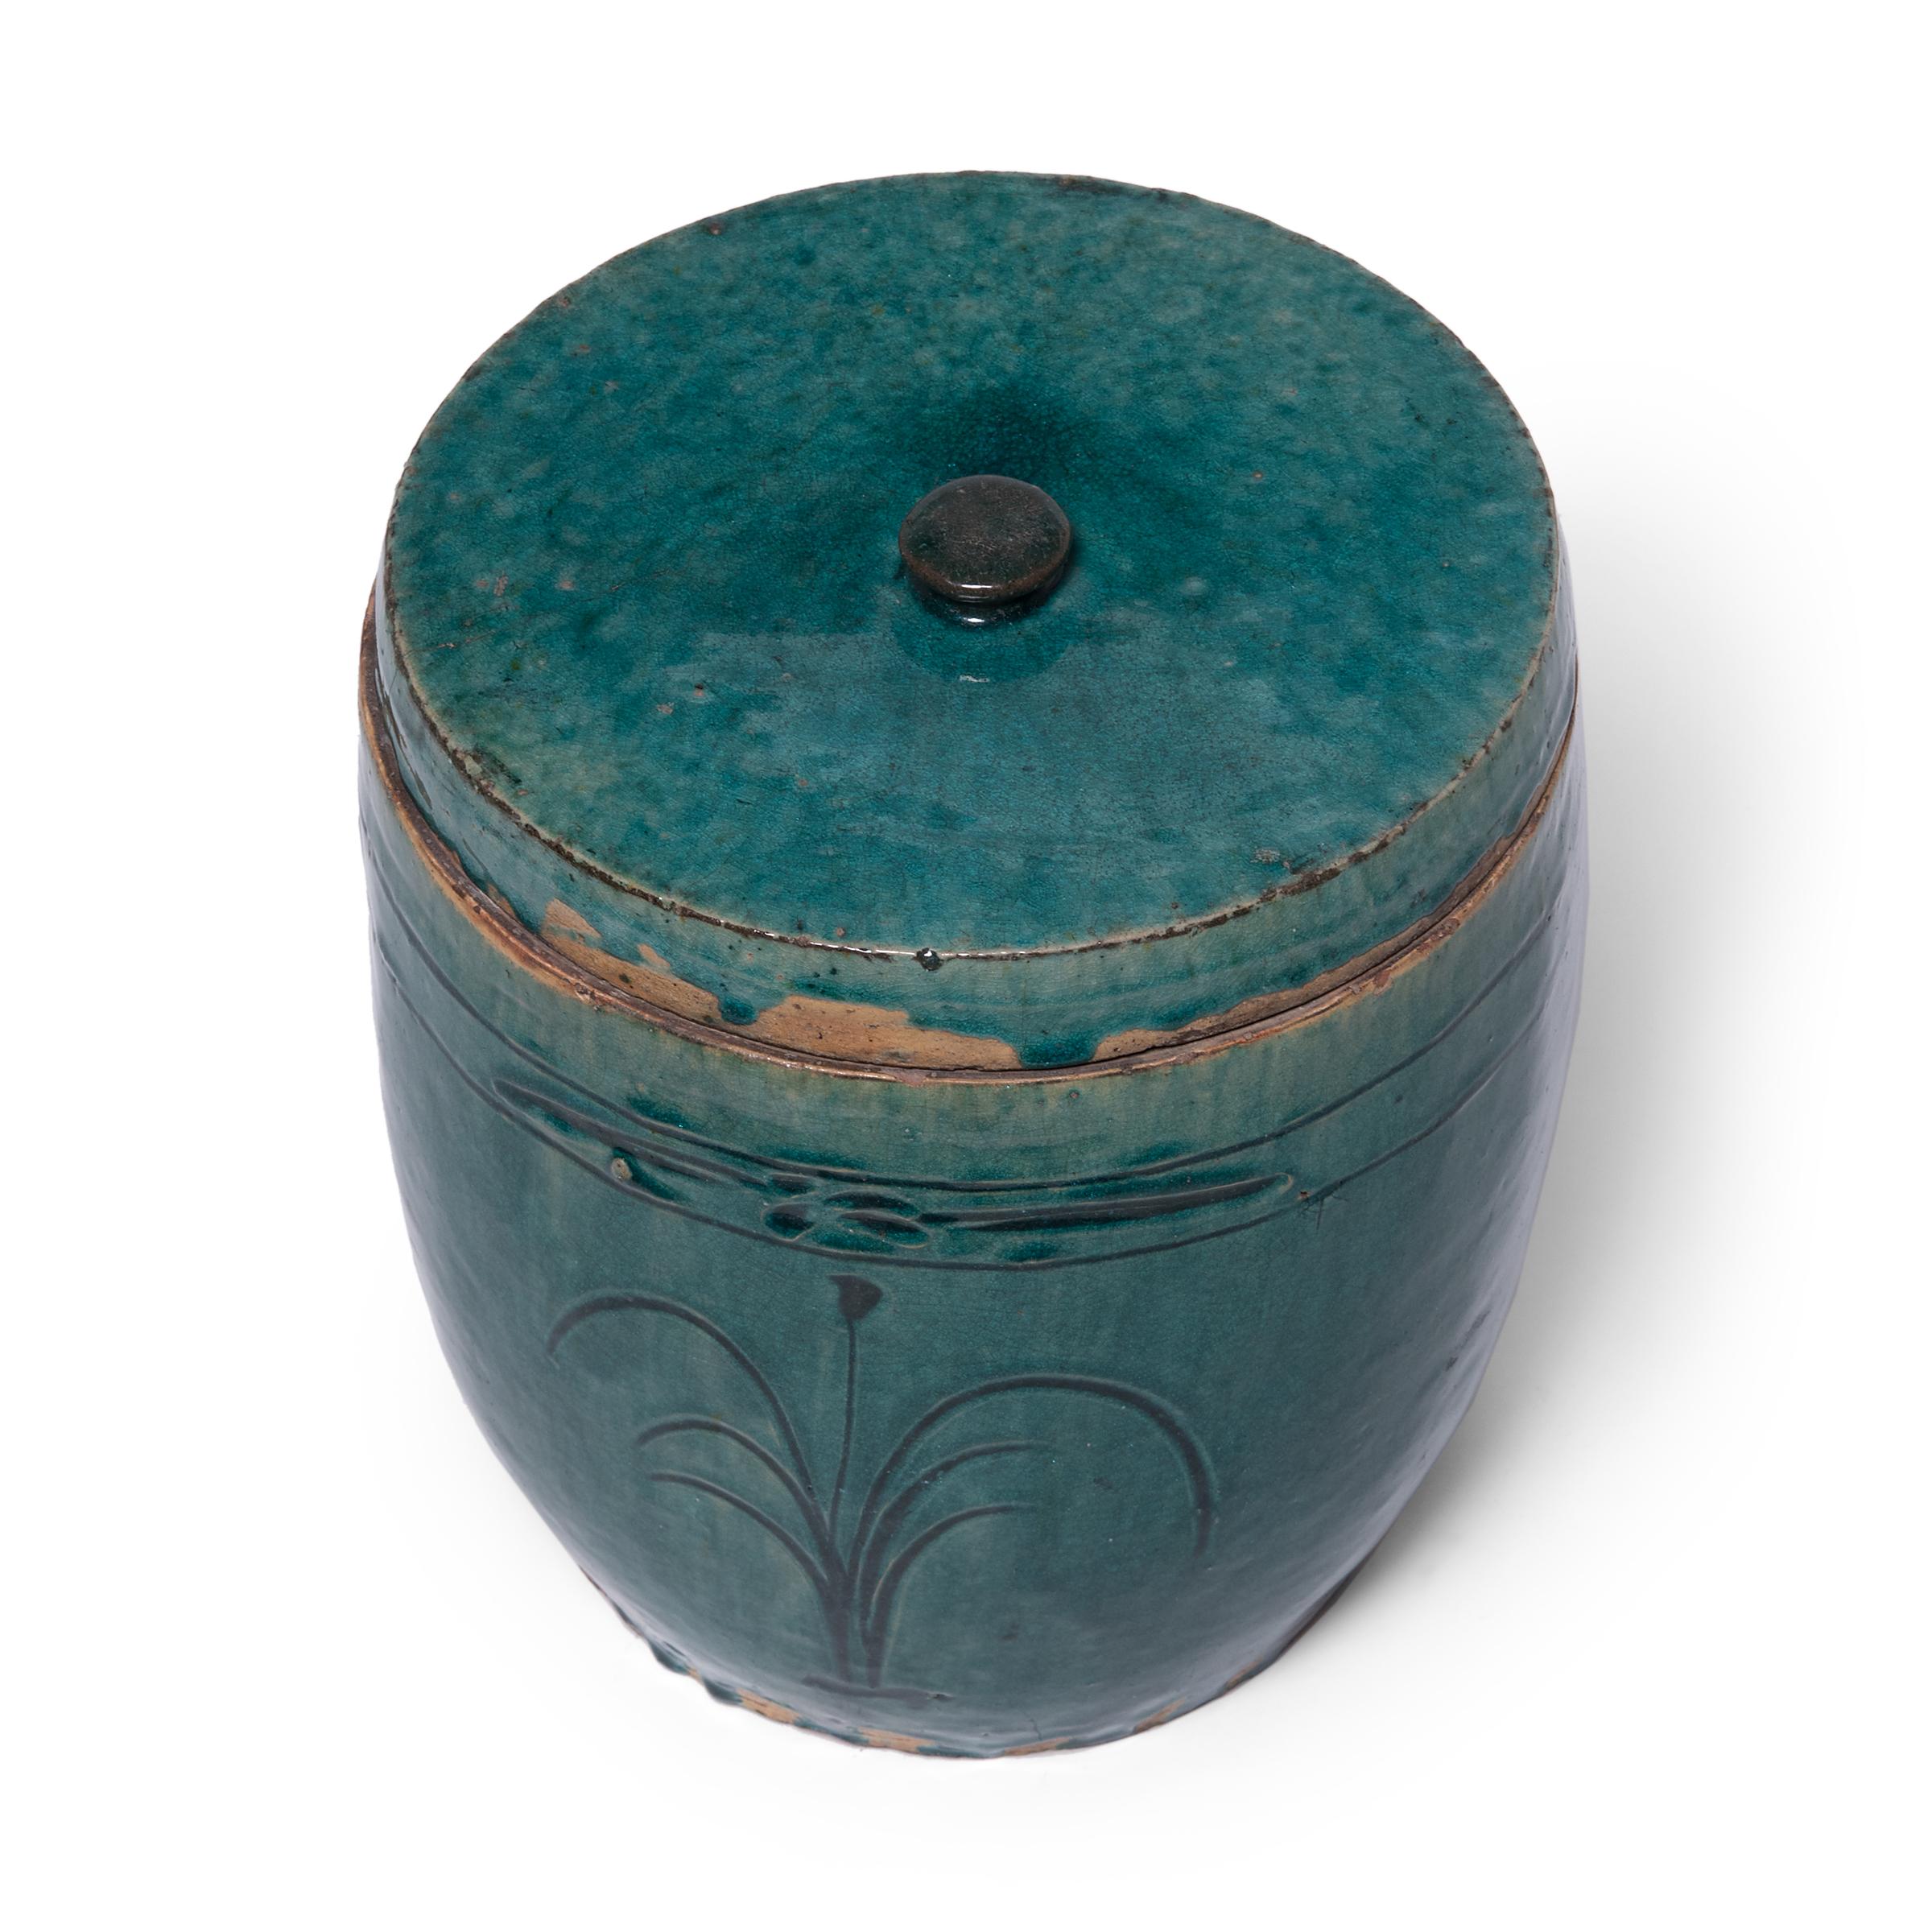 20th Century Chinese Green Glazed Apothecary Jar, c. 1900